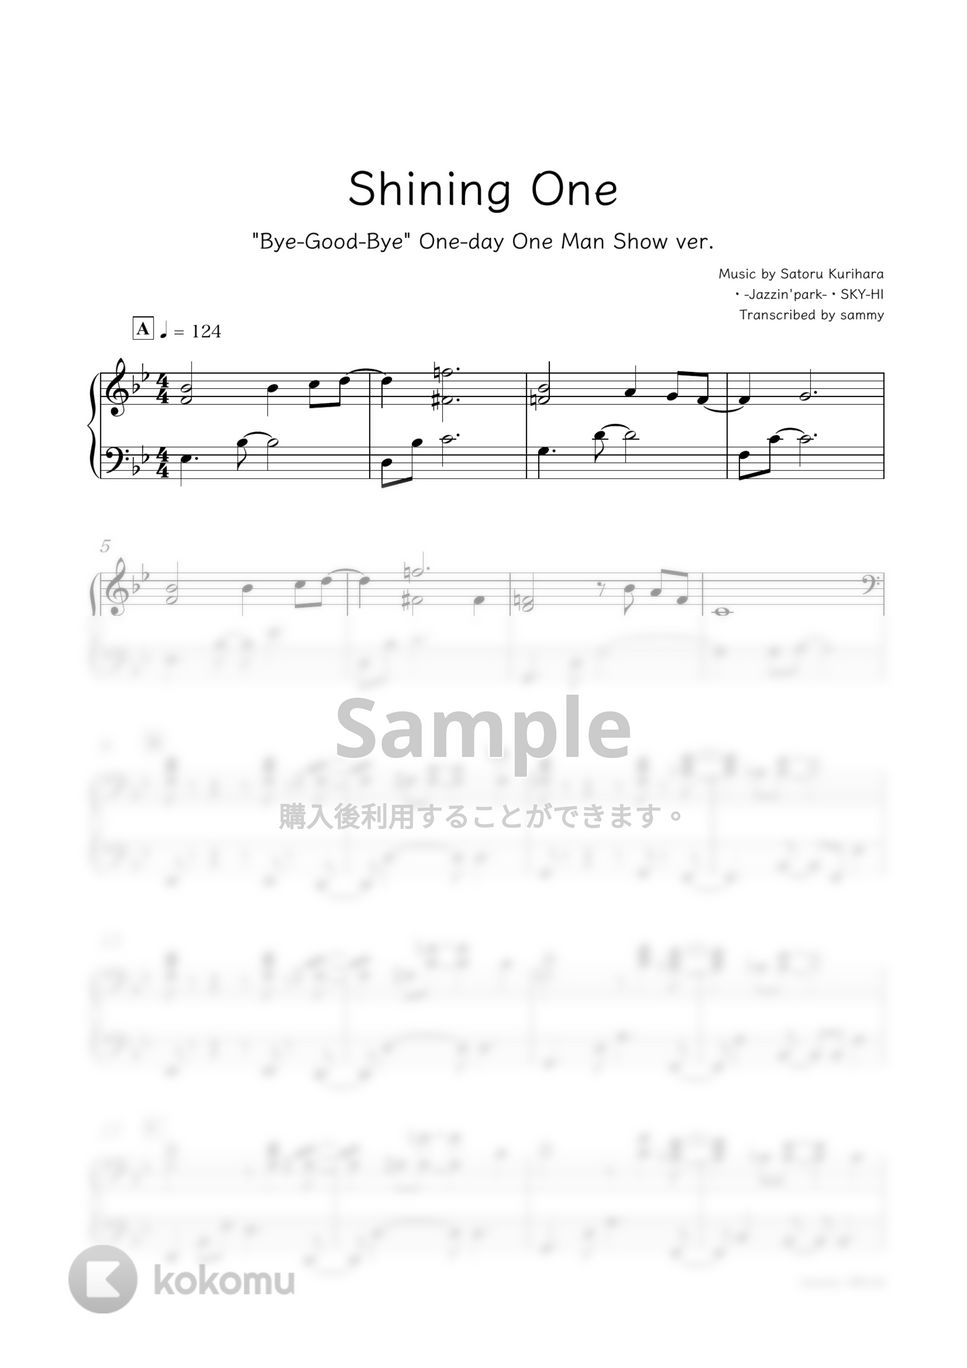 BE:FIRST - Shining One (ピアノソロ&弾き語りセット) by sammy